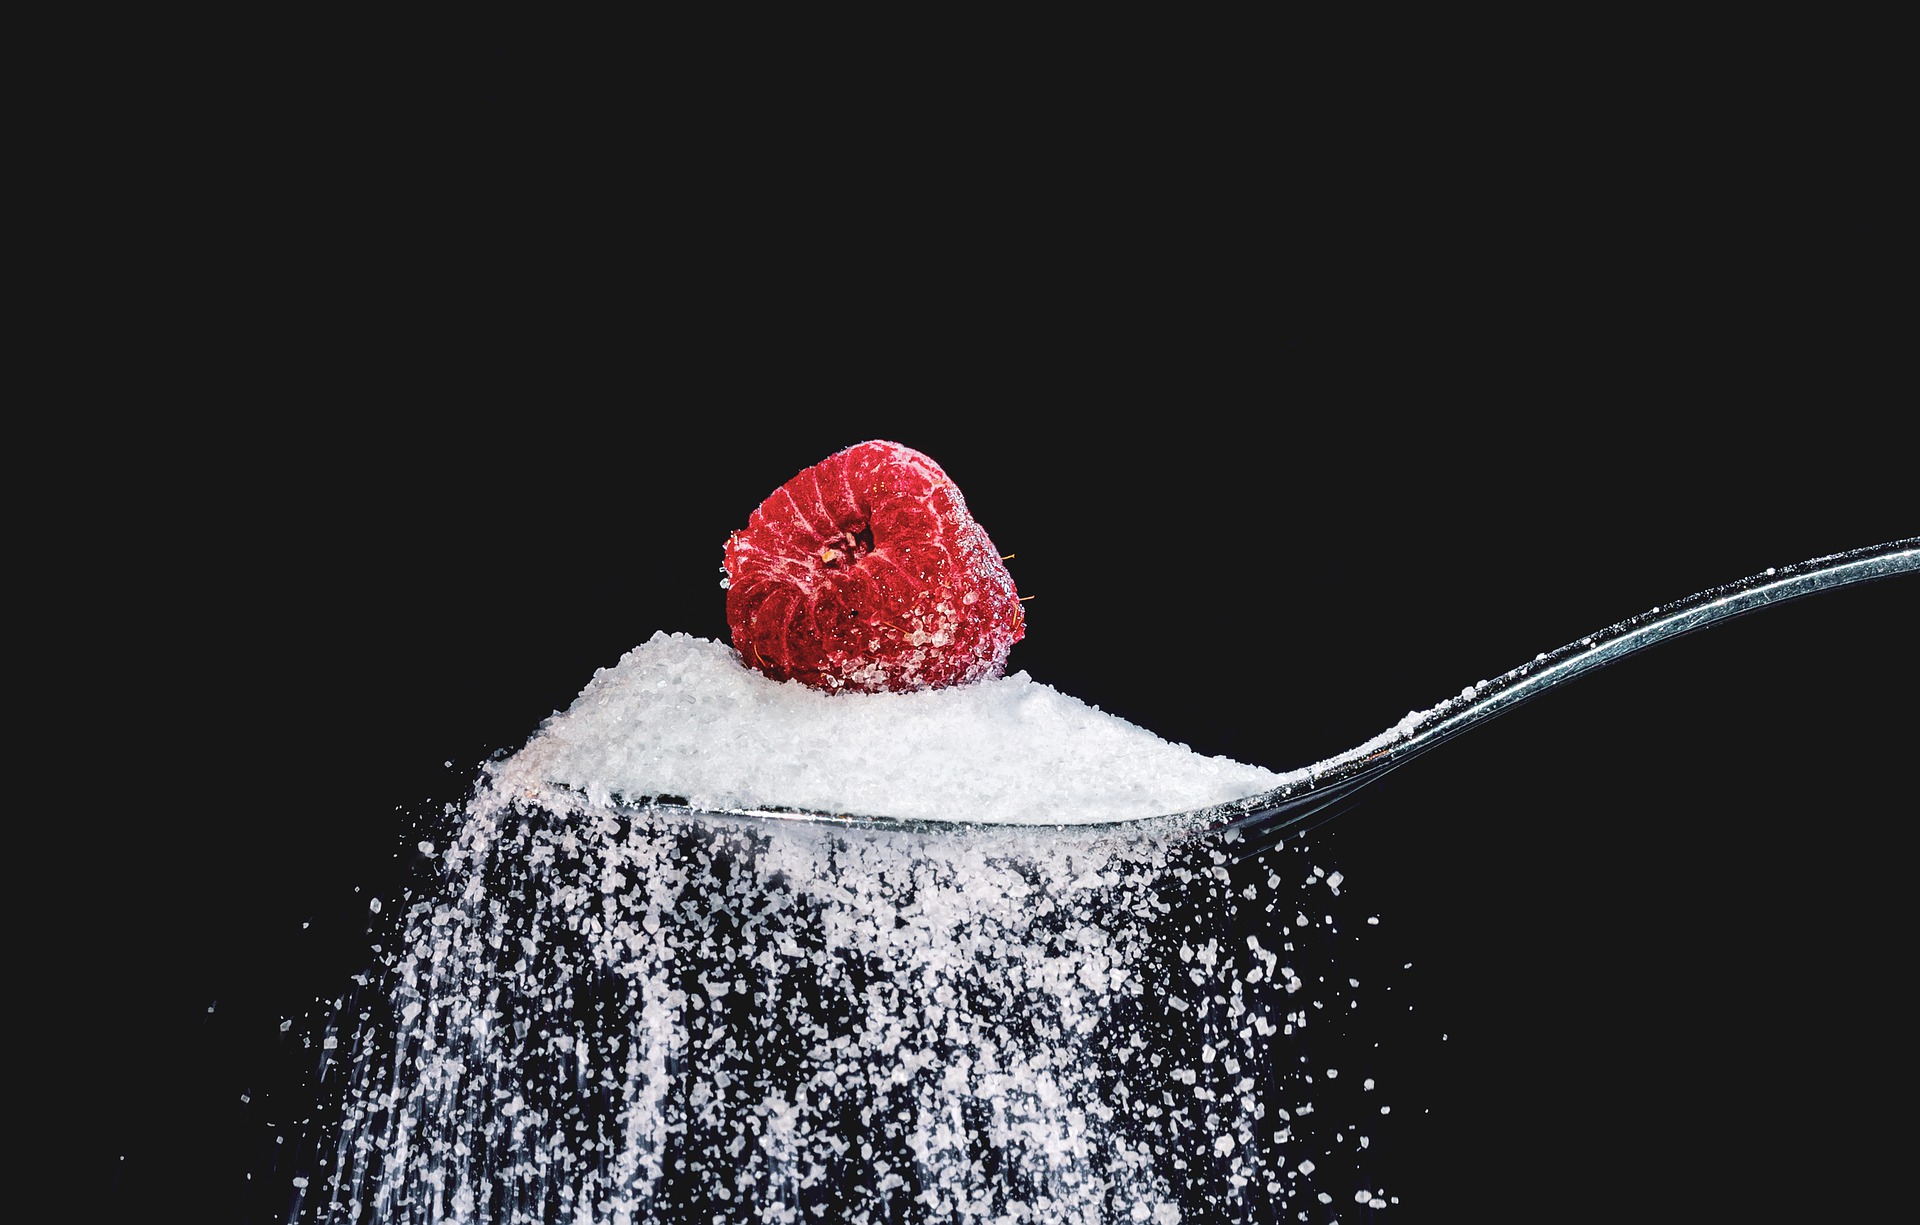 reduce sugar intake for weight loss